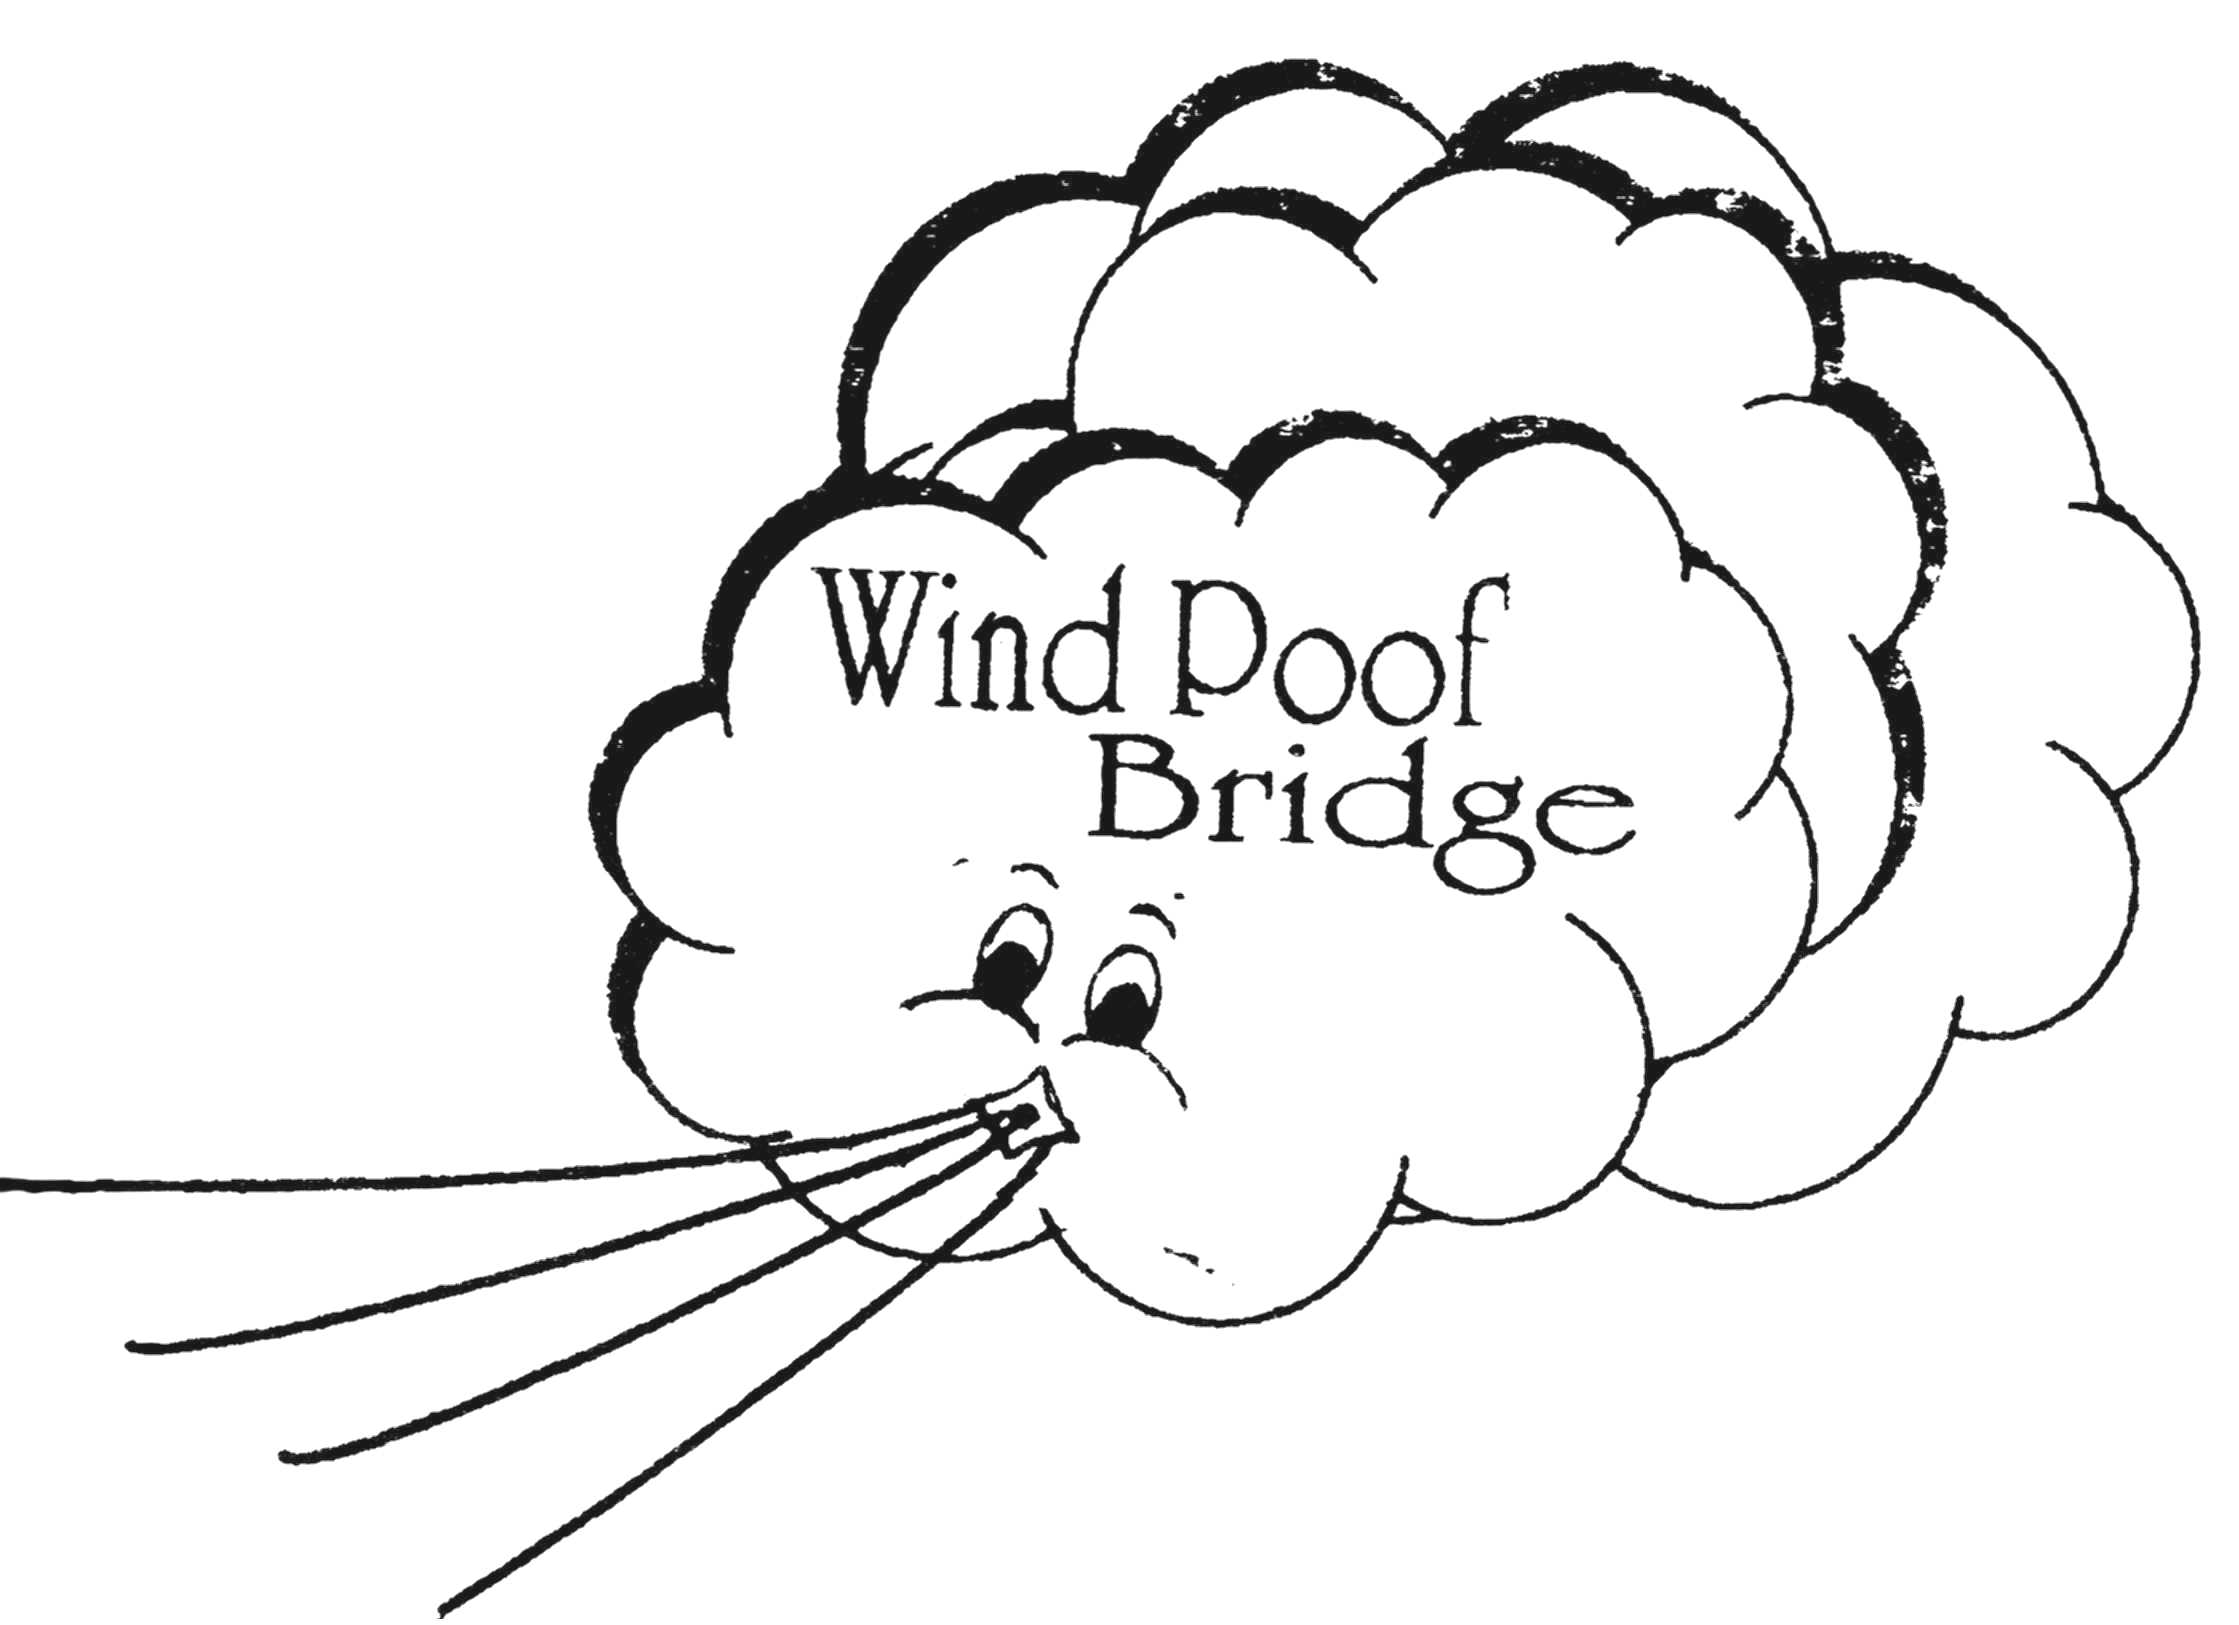 Wind Poof Bridge